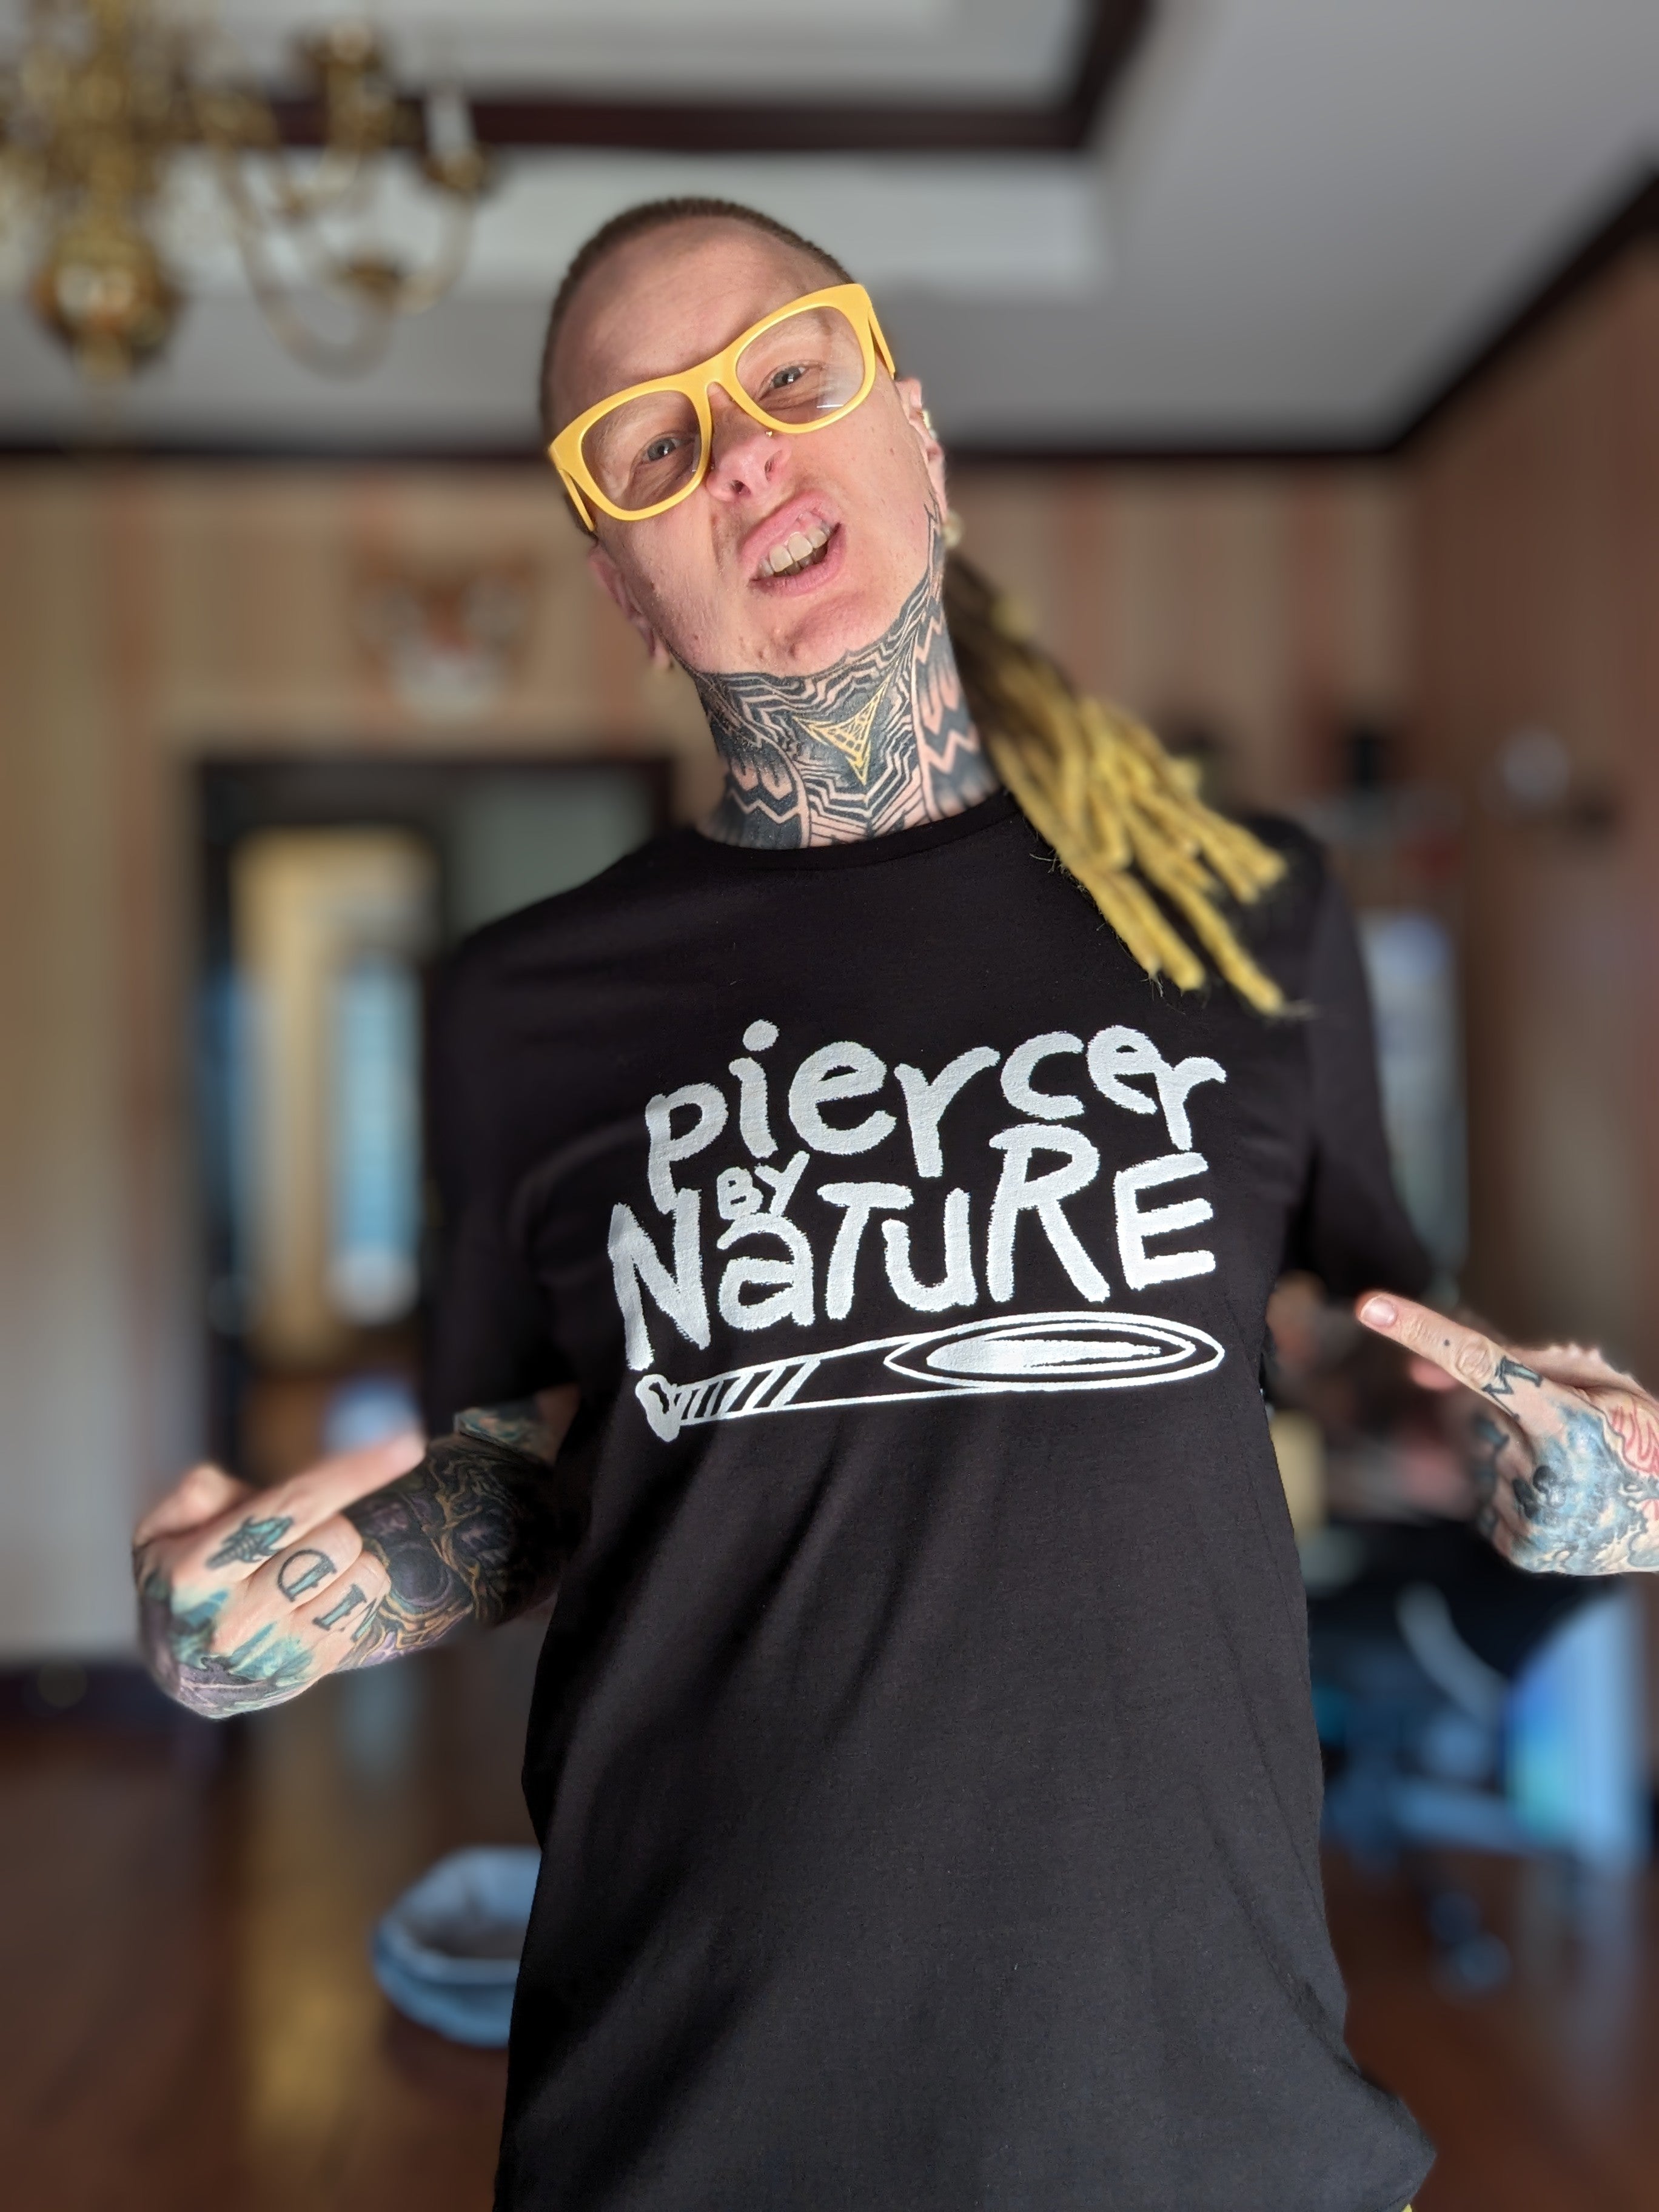 Piercer by nature shirt